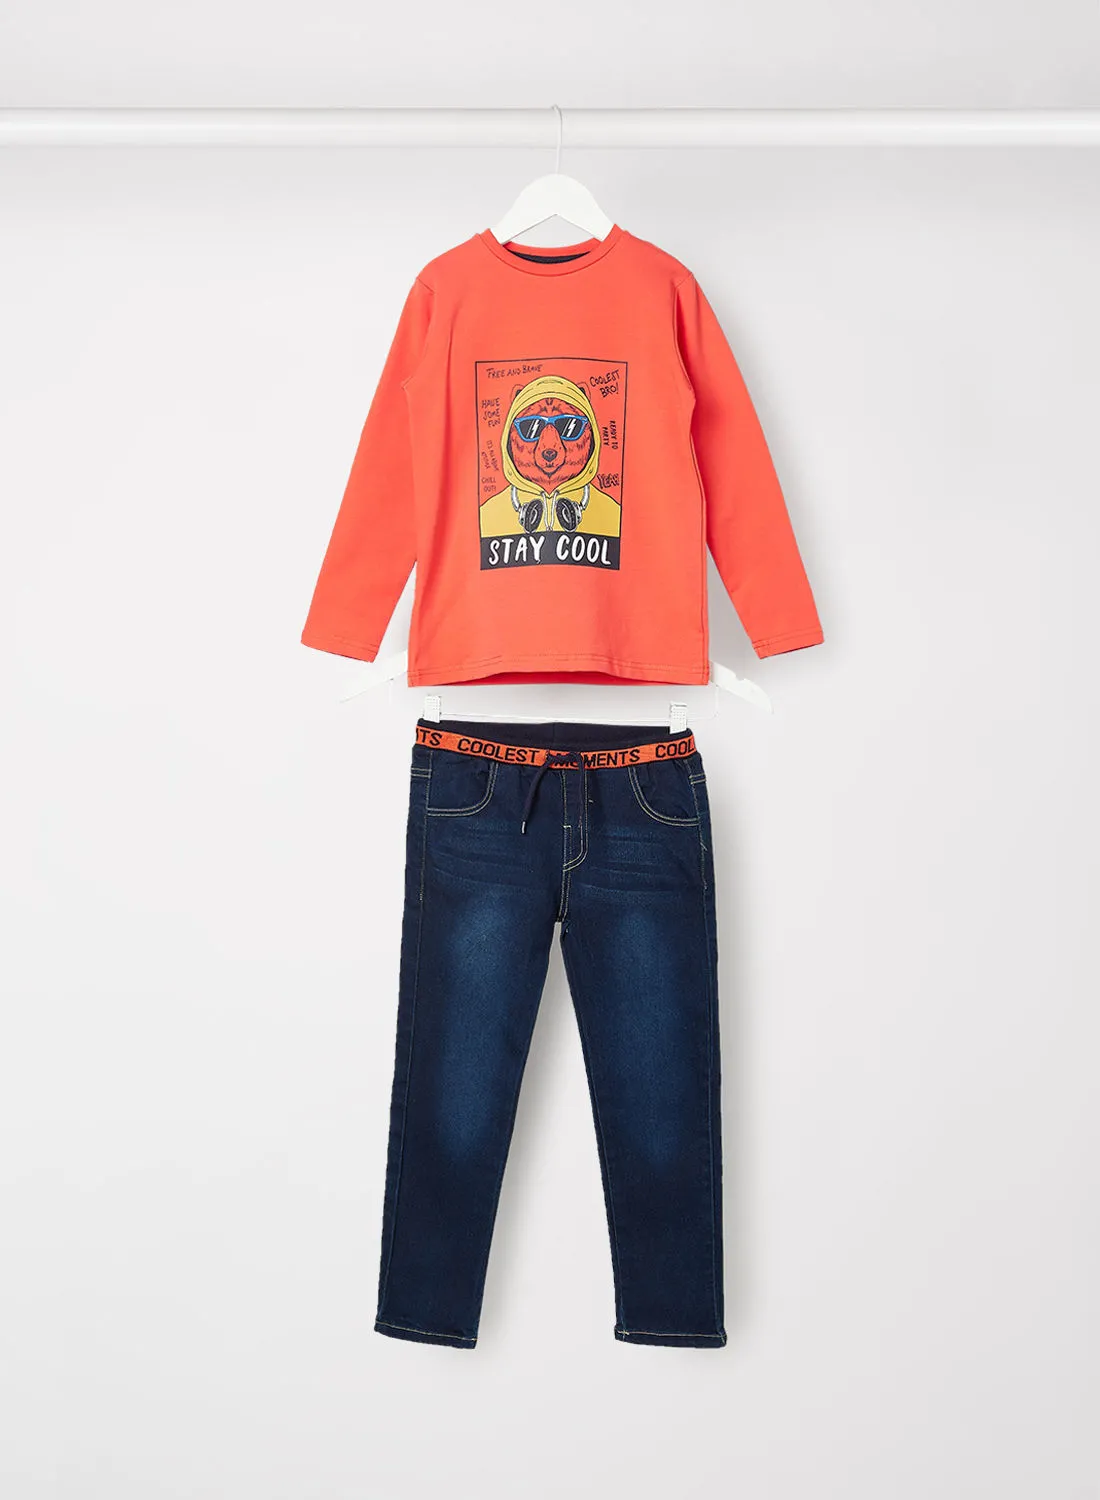 Babybol Baby/Kids Graphic T-Shirt and Jeans Set Orange/Blue